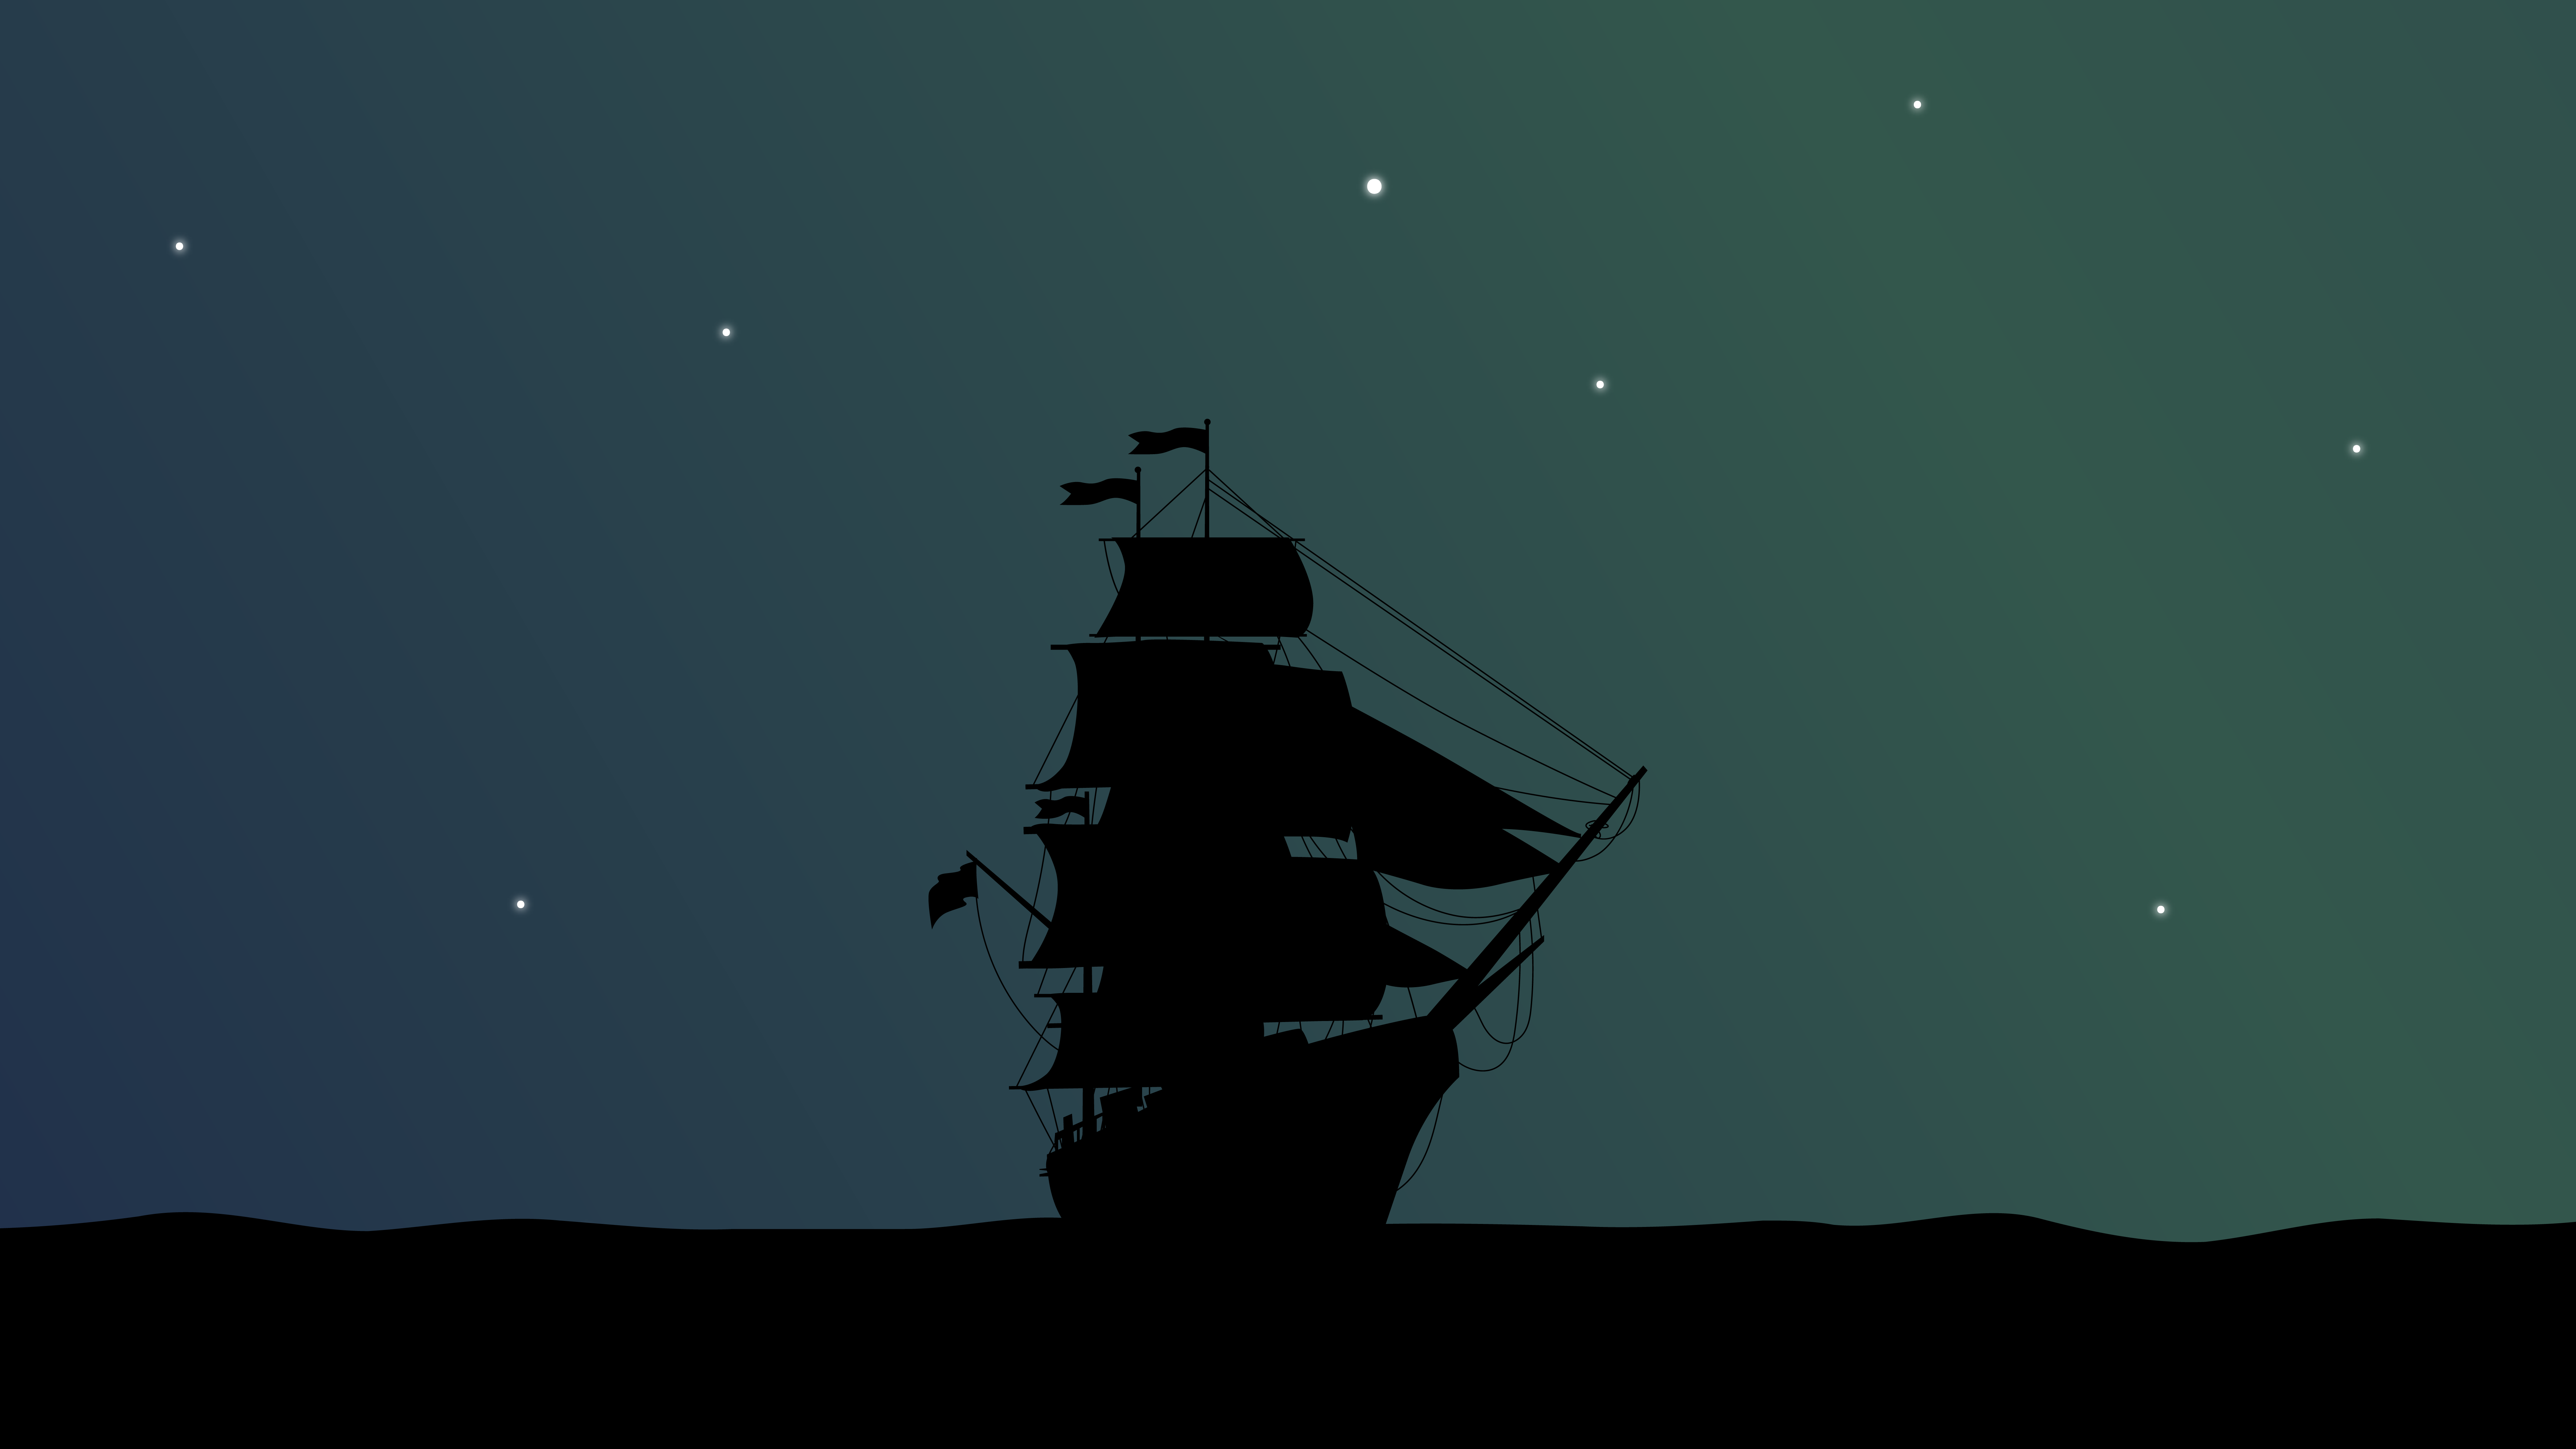 General 7680x4320 artwork minimalism stars night Pirate ship sea silhouette